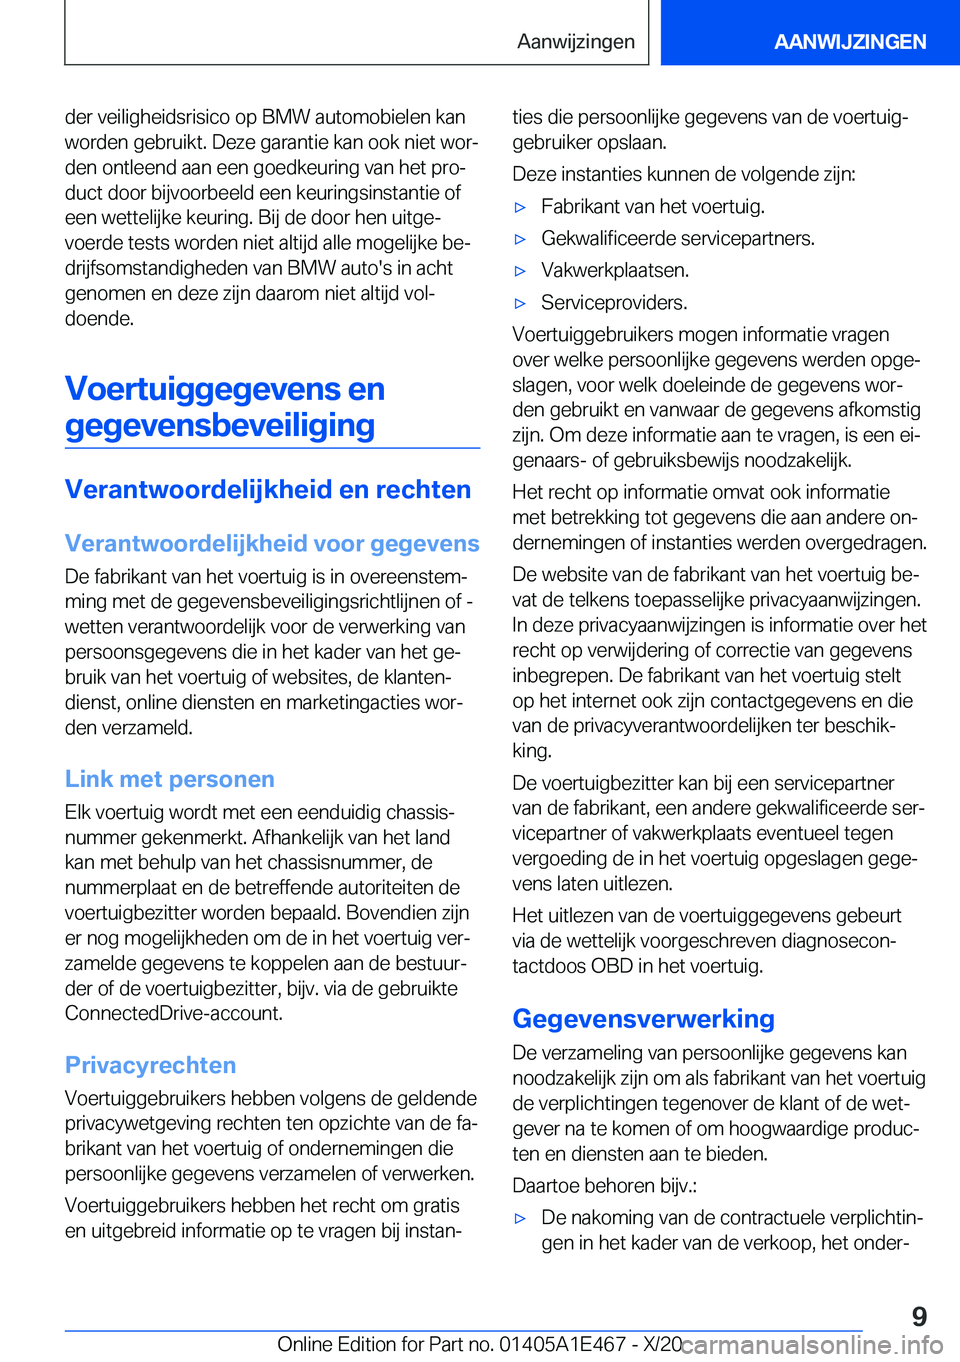 BMW M3 2021  Instructieboekjes (in Dutch) �d�e�r��v�e�i�l�i�g�h�e�i�d�s�r�i�s�i�c�o��o�p��B�M�W��a�u�t�o�m�o�b�i�e�l�e�n��k�a�n
�w�o�r�d�e�n��g�e�b�r�u�i�k�t�.��D�e�z�e��g�a�r�a�n�t�i�e��k�a�n��o�o�k��n�i�e�t��w�o�rj
�d�e�n��o�n